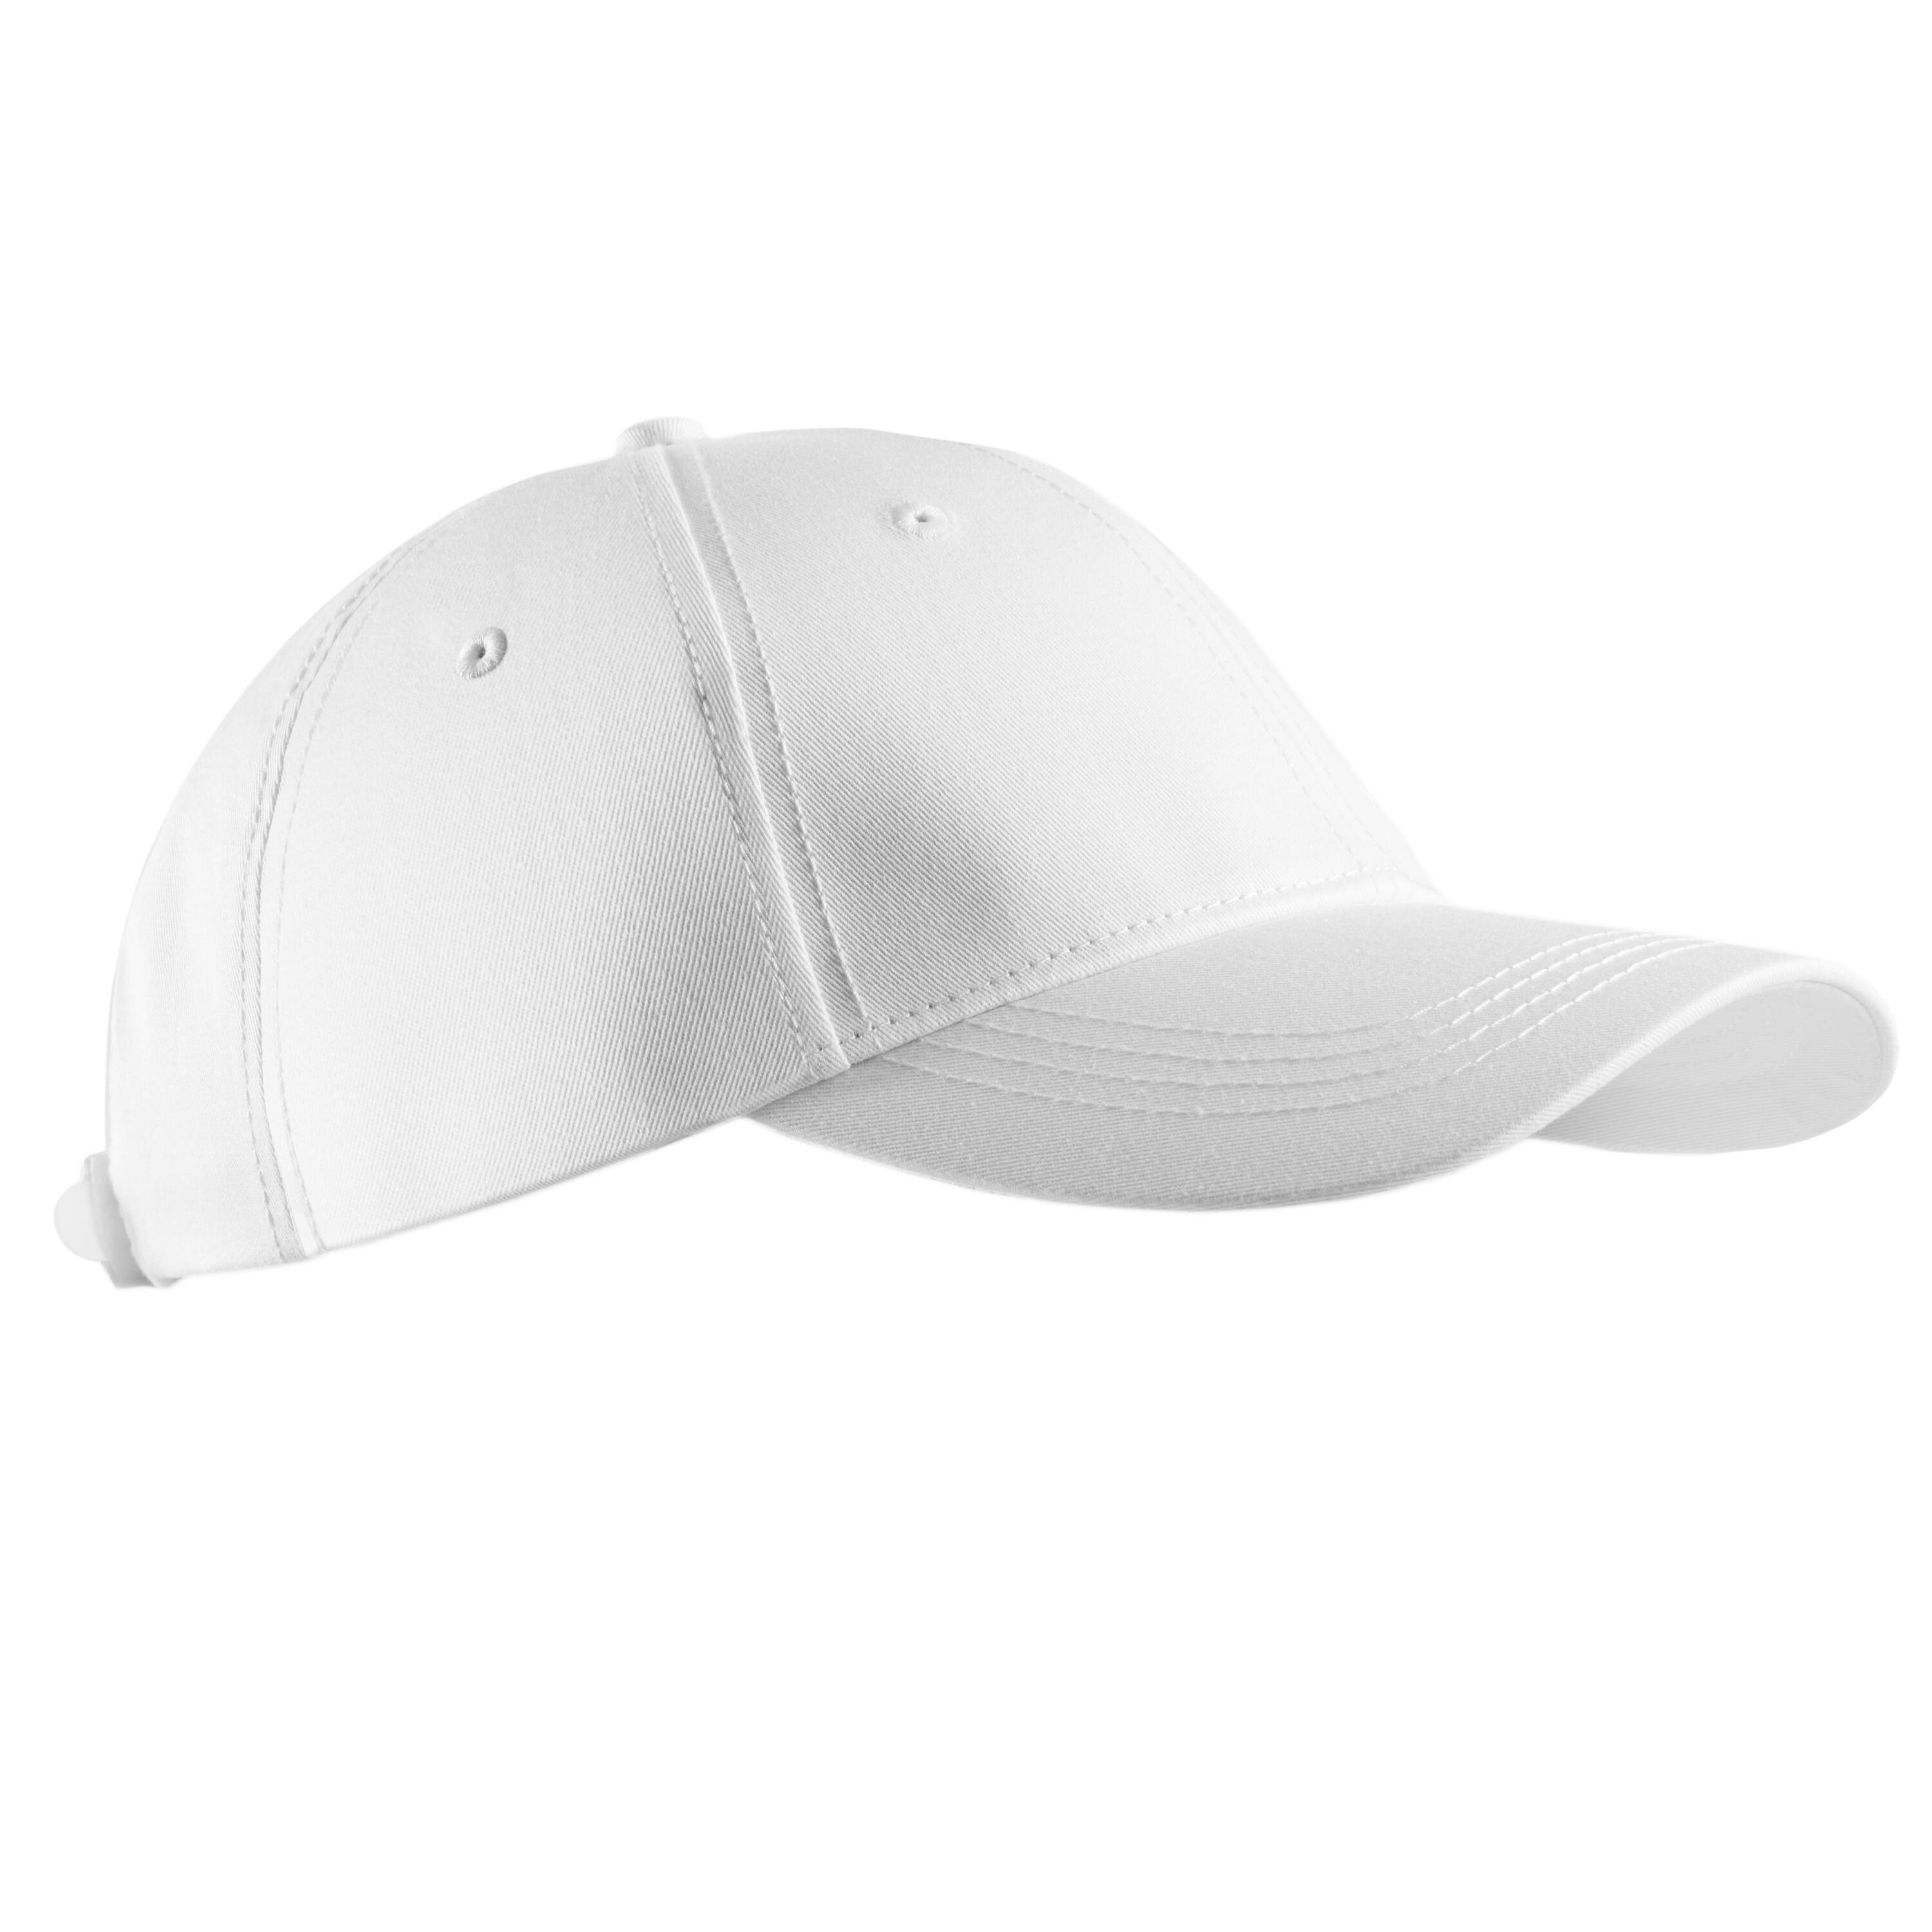 Adults' Golf Cap - MW 500 White 2/5